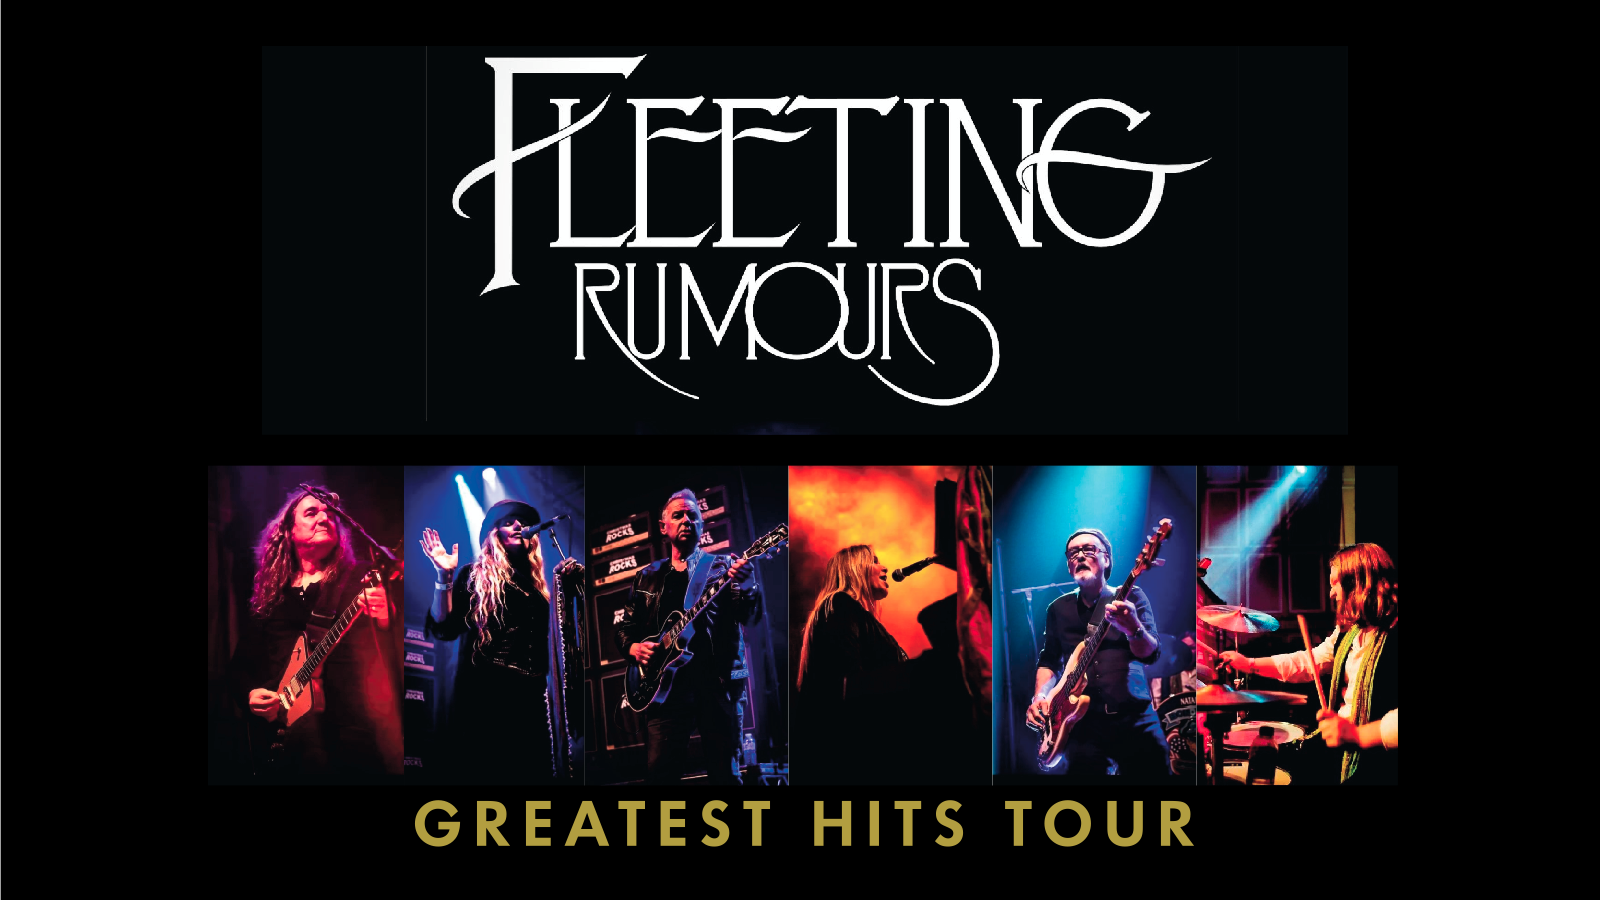 Fleetwood Mac’s Greatest Hits – starring Fleeting Rumours